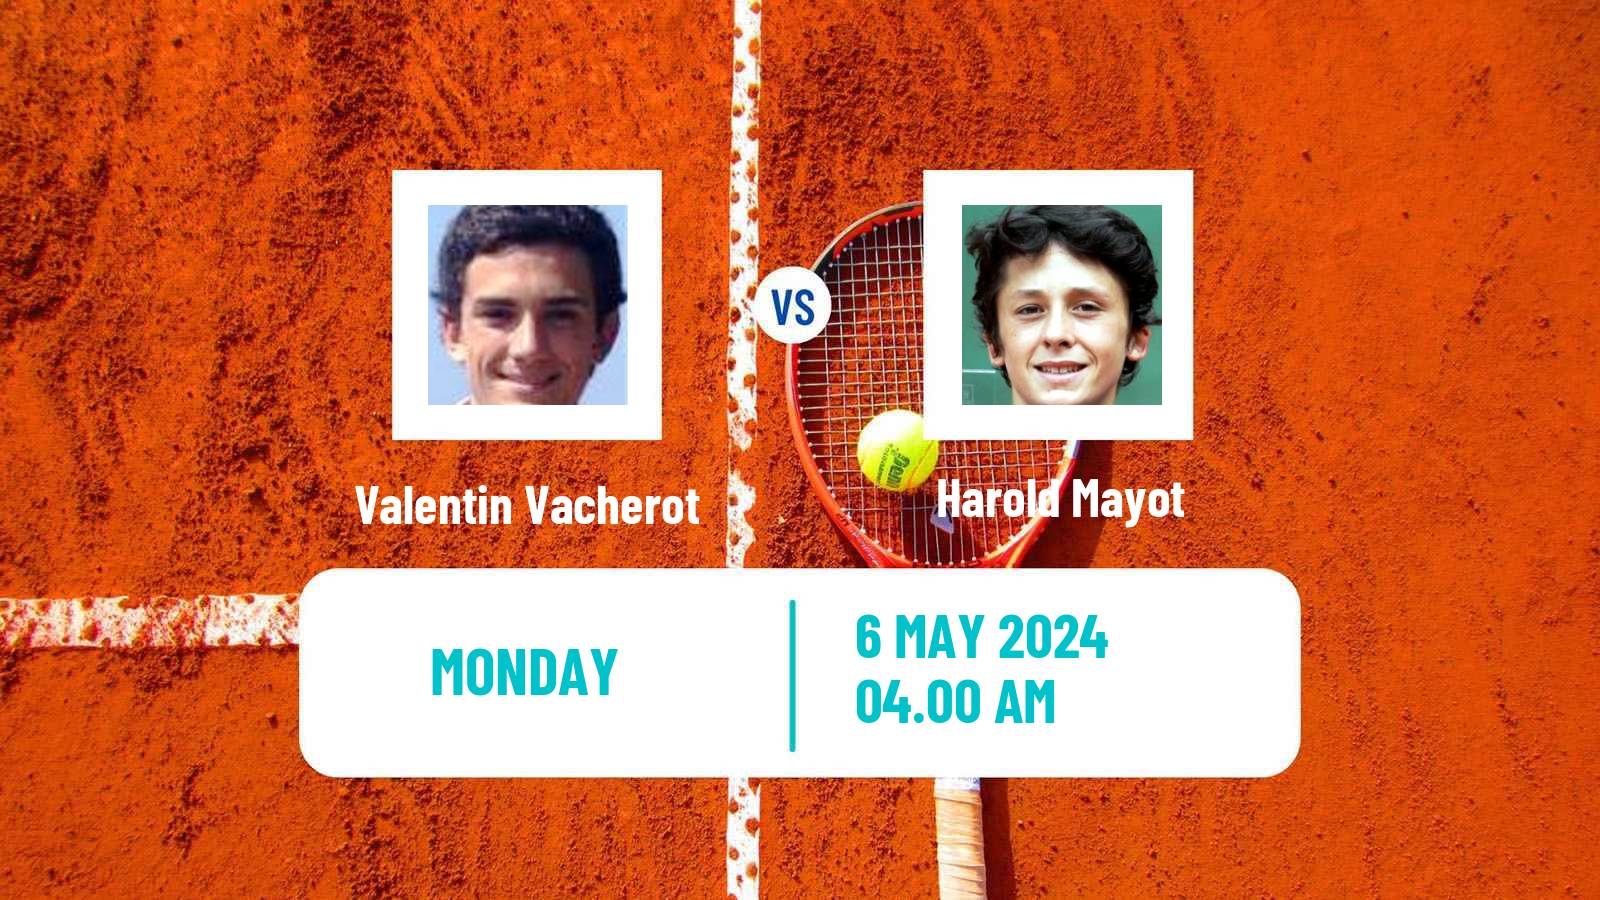 Tennis ATP Roma Valentin Vacherot - Harold Mayot